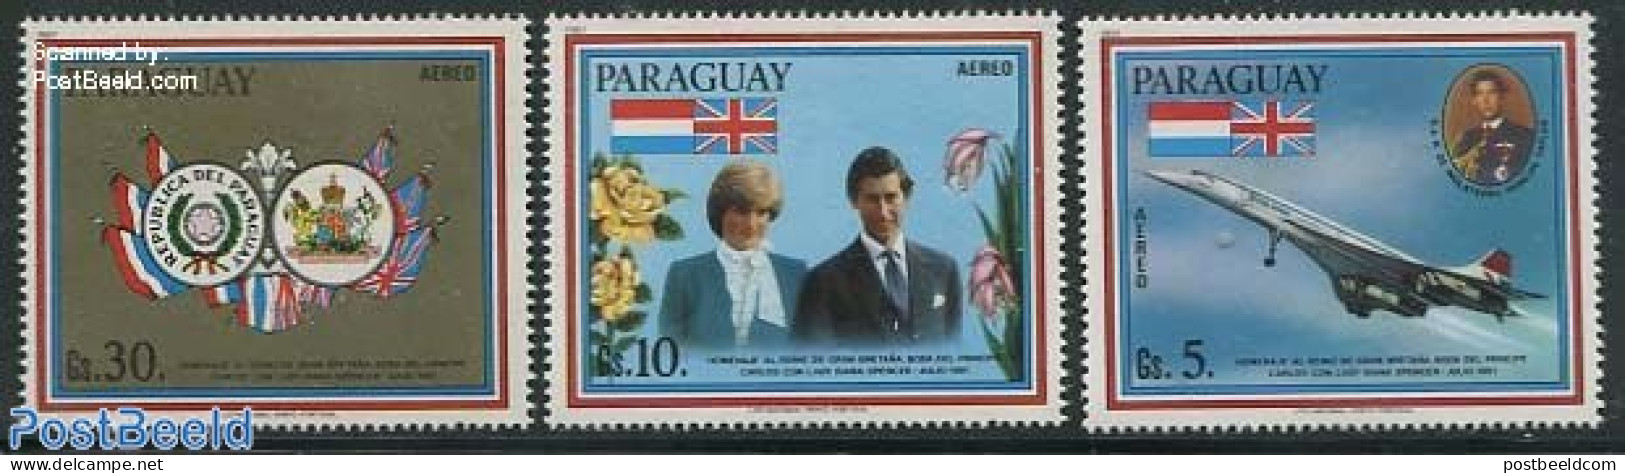 Paraguay 1981 Charles & Diana Wedding 3v, Mint NH, History - Charles & Diana - Kings & Queens (Royalty) - Familias Reales